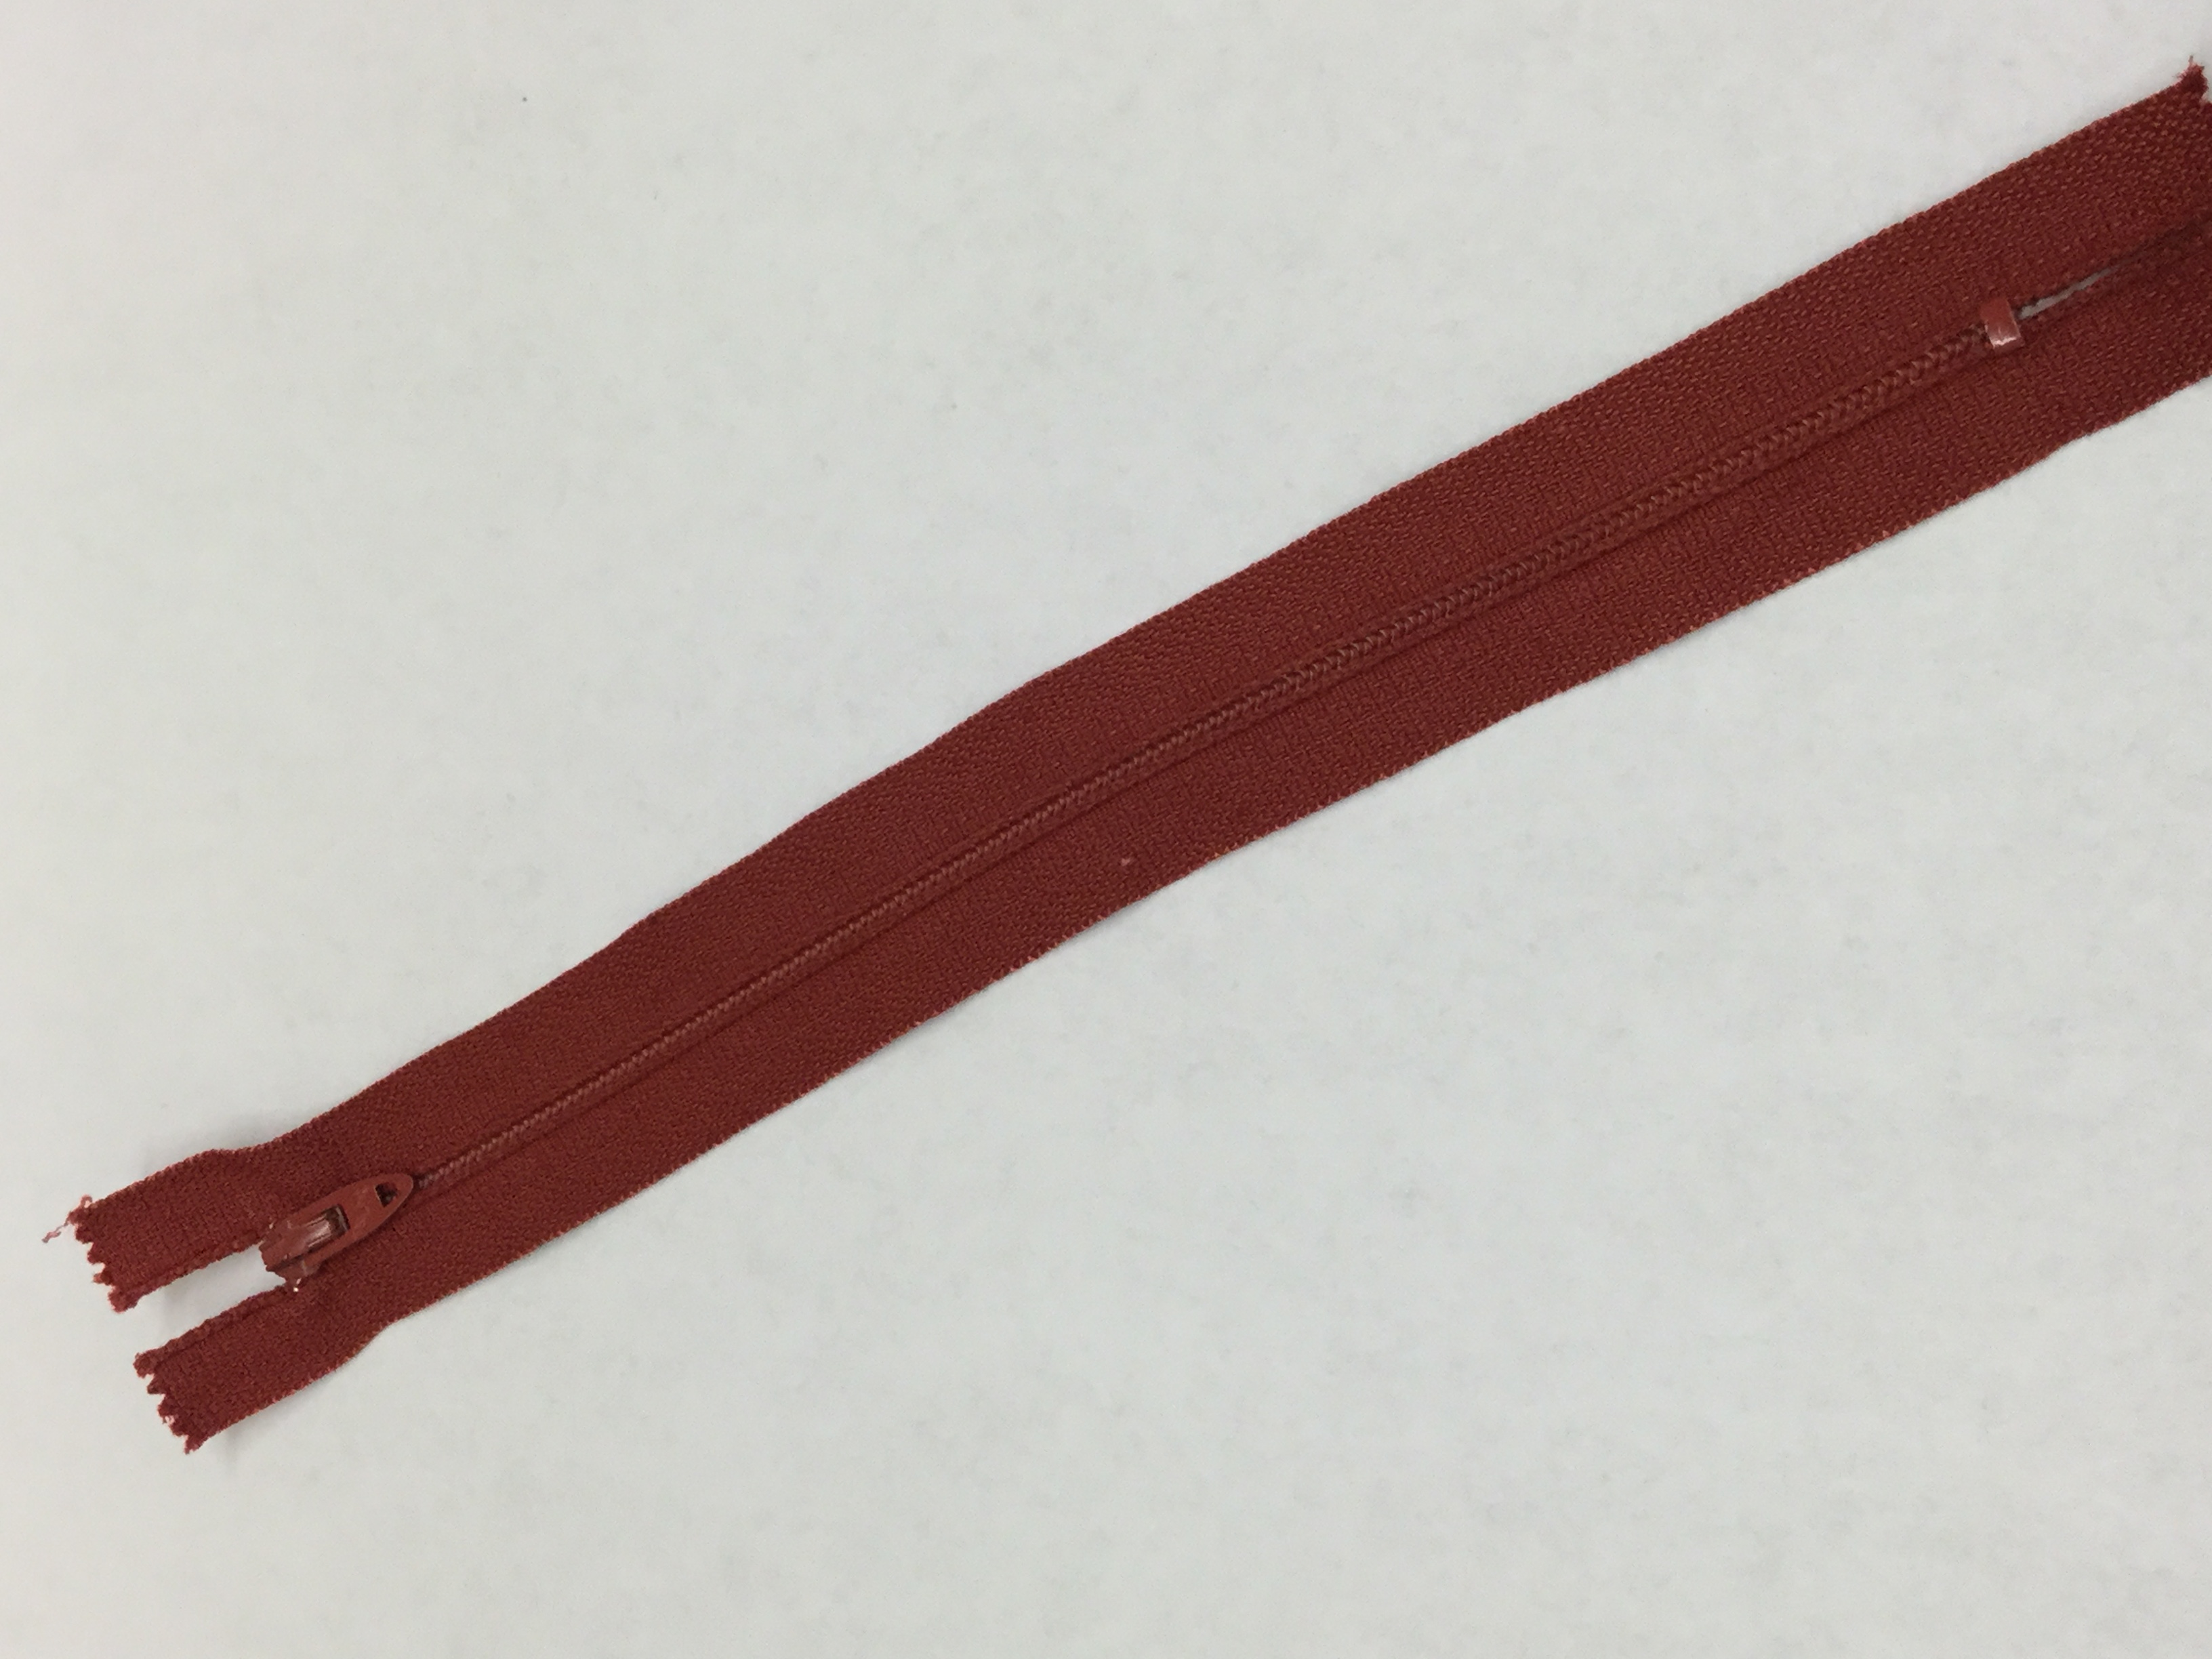 08 inch - Talon Nylon Coil Metal Pull Zipper - Red